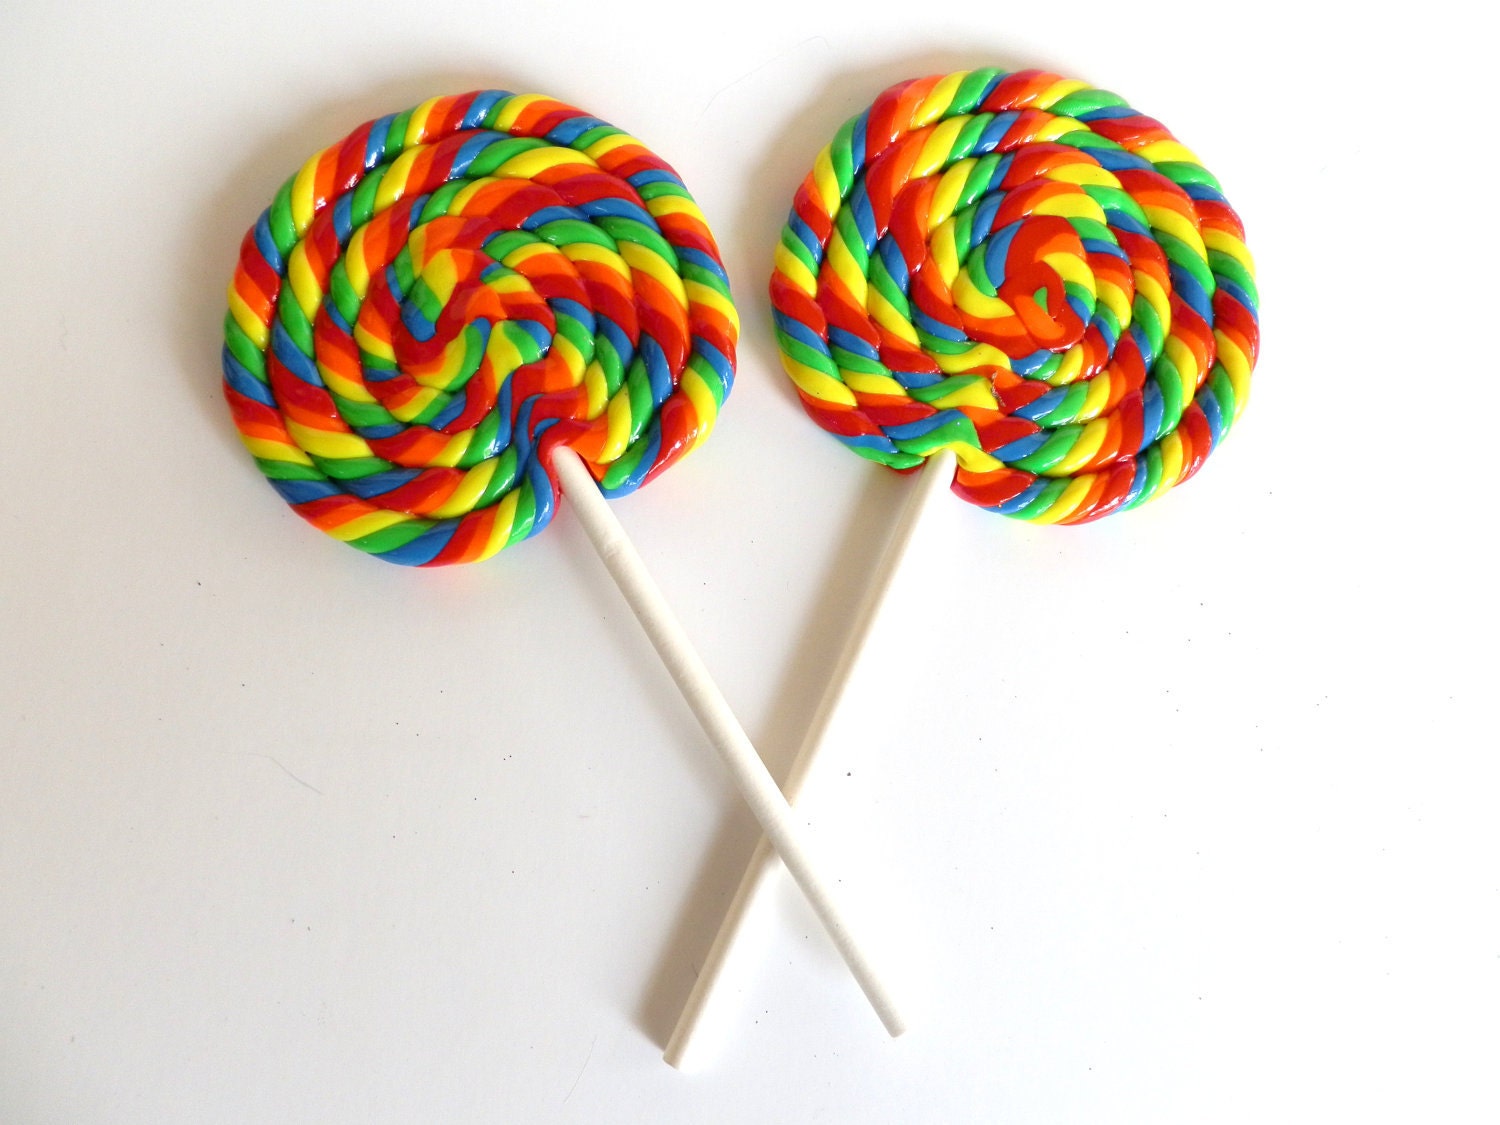 swirled lollipop